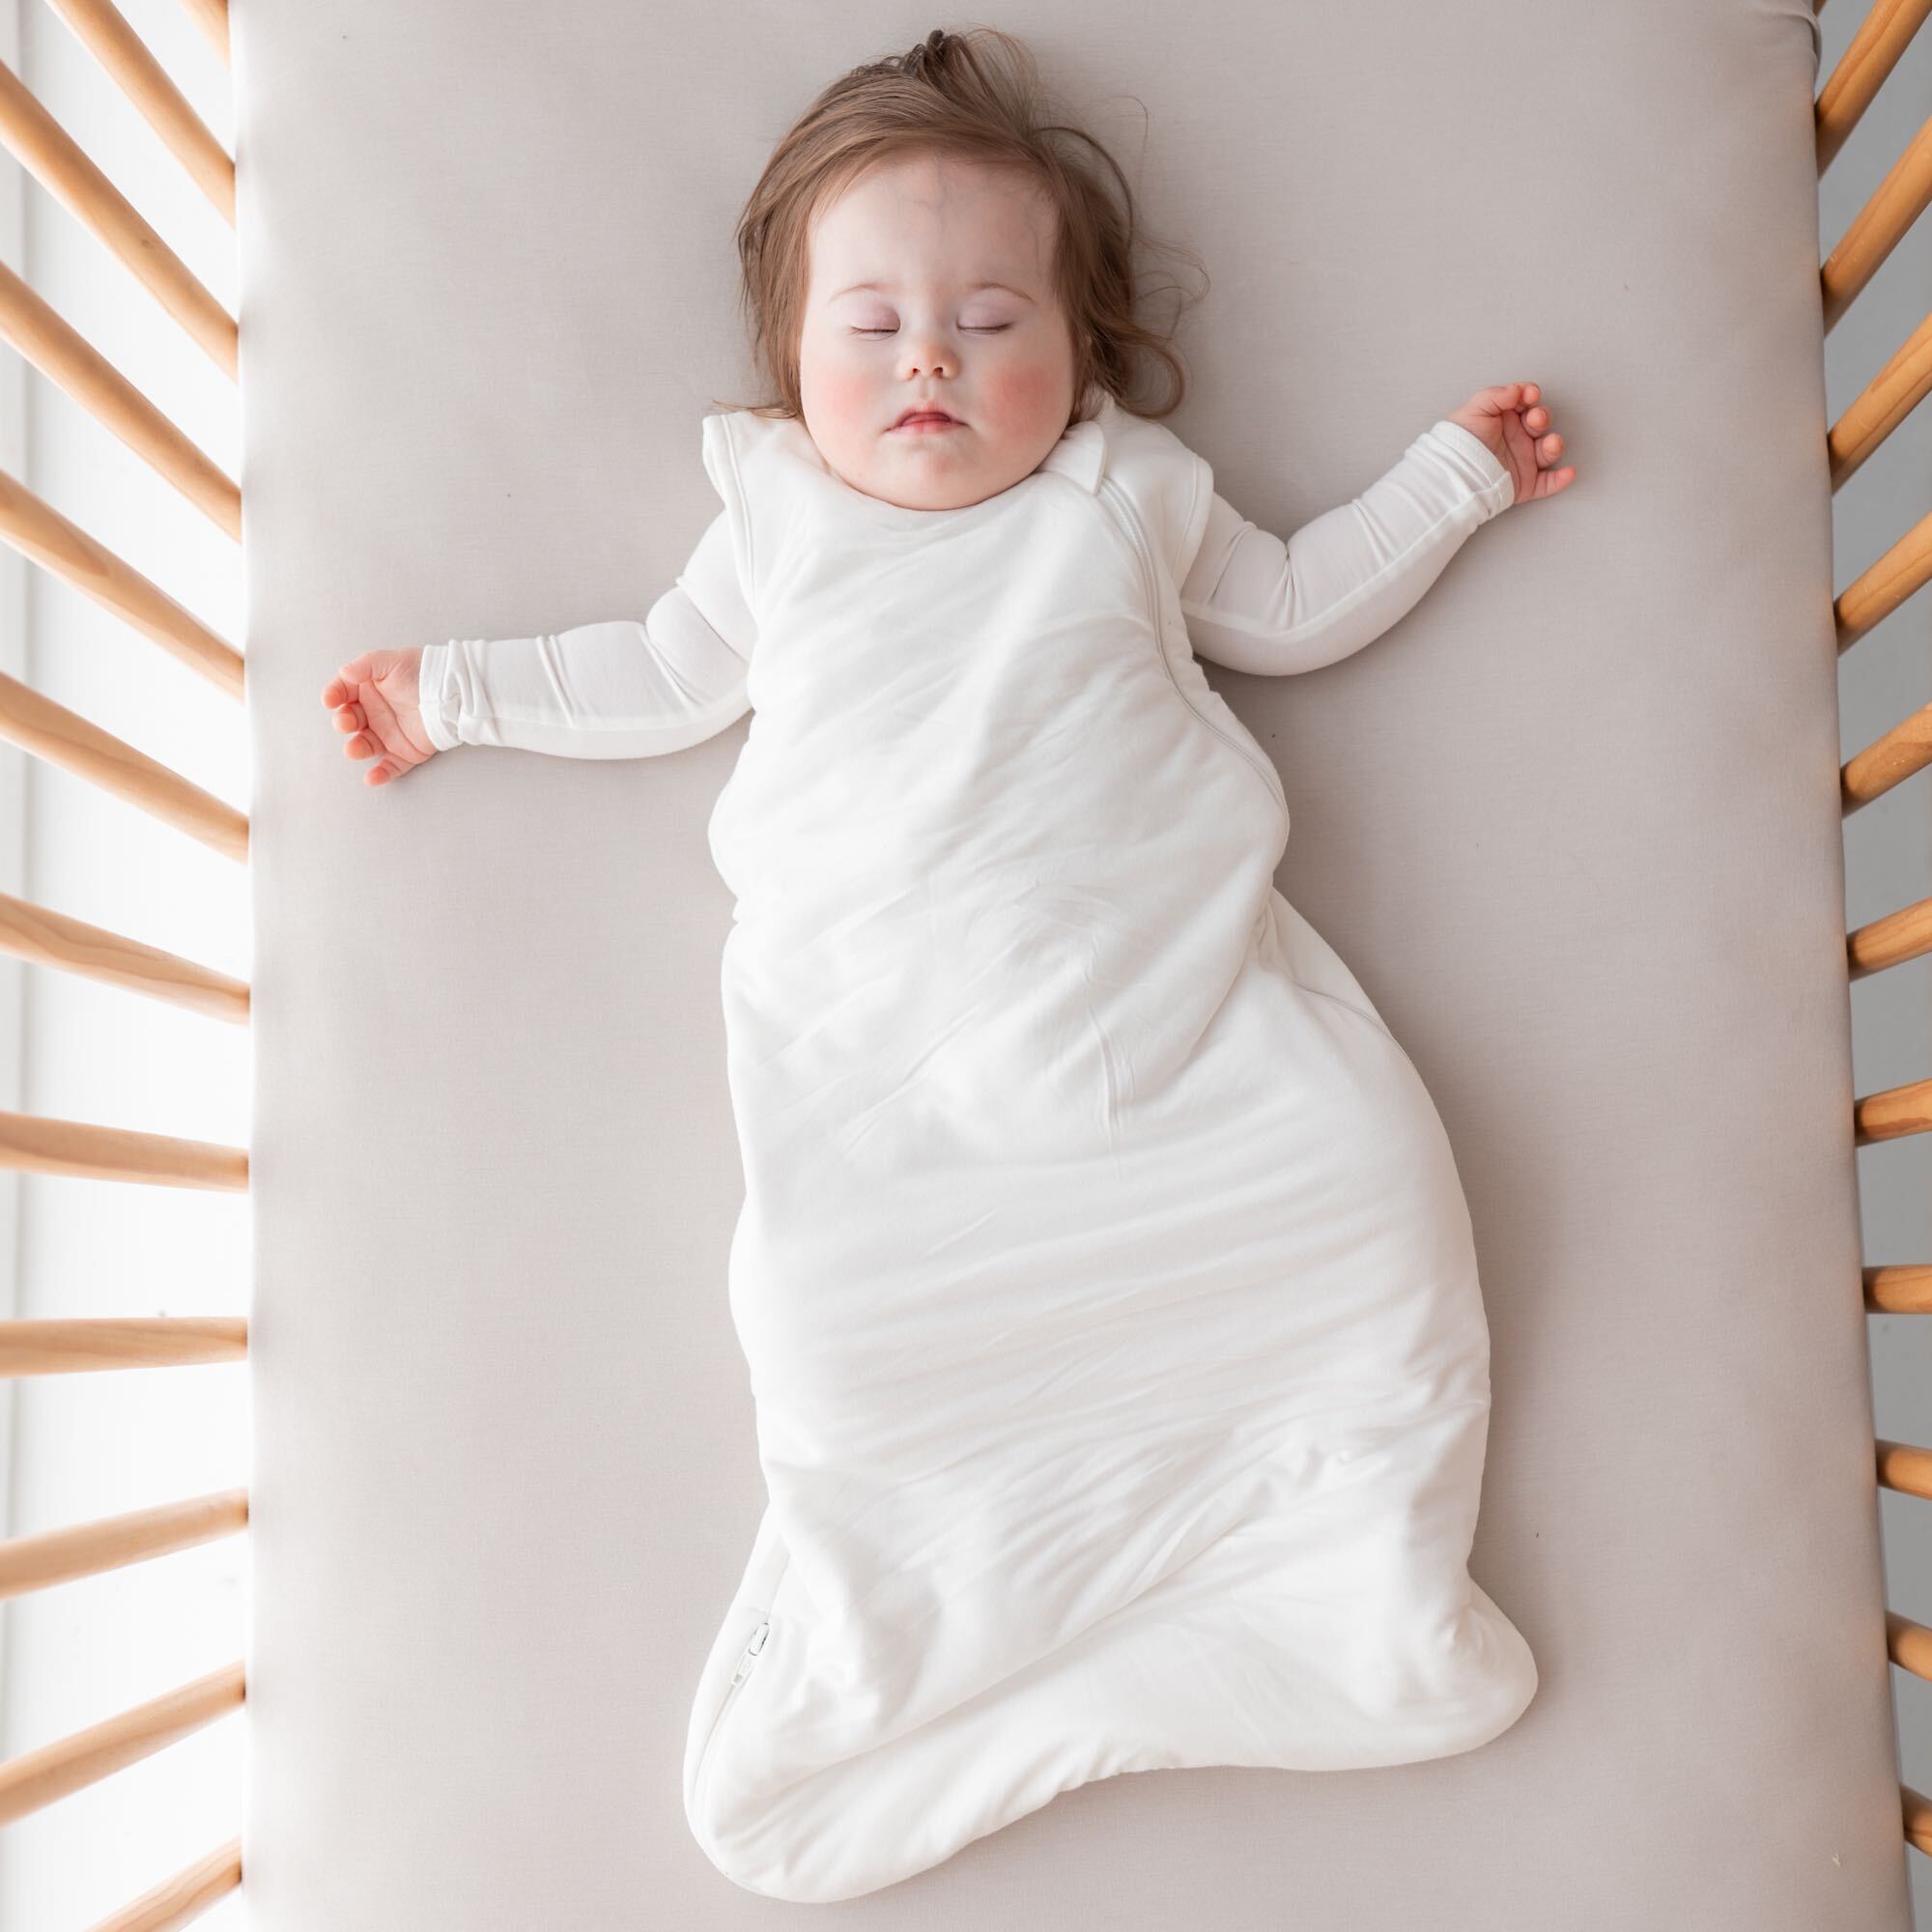 Baby asleep in a crib wearing a Kyte sleep bag